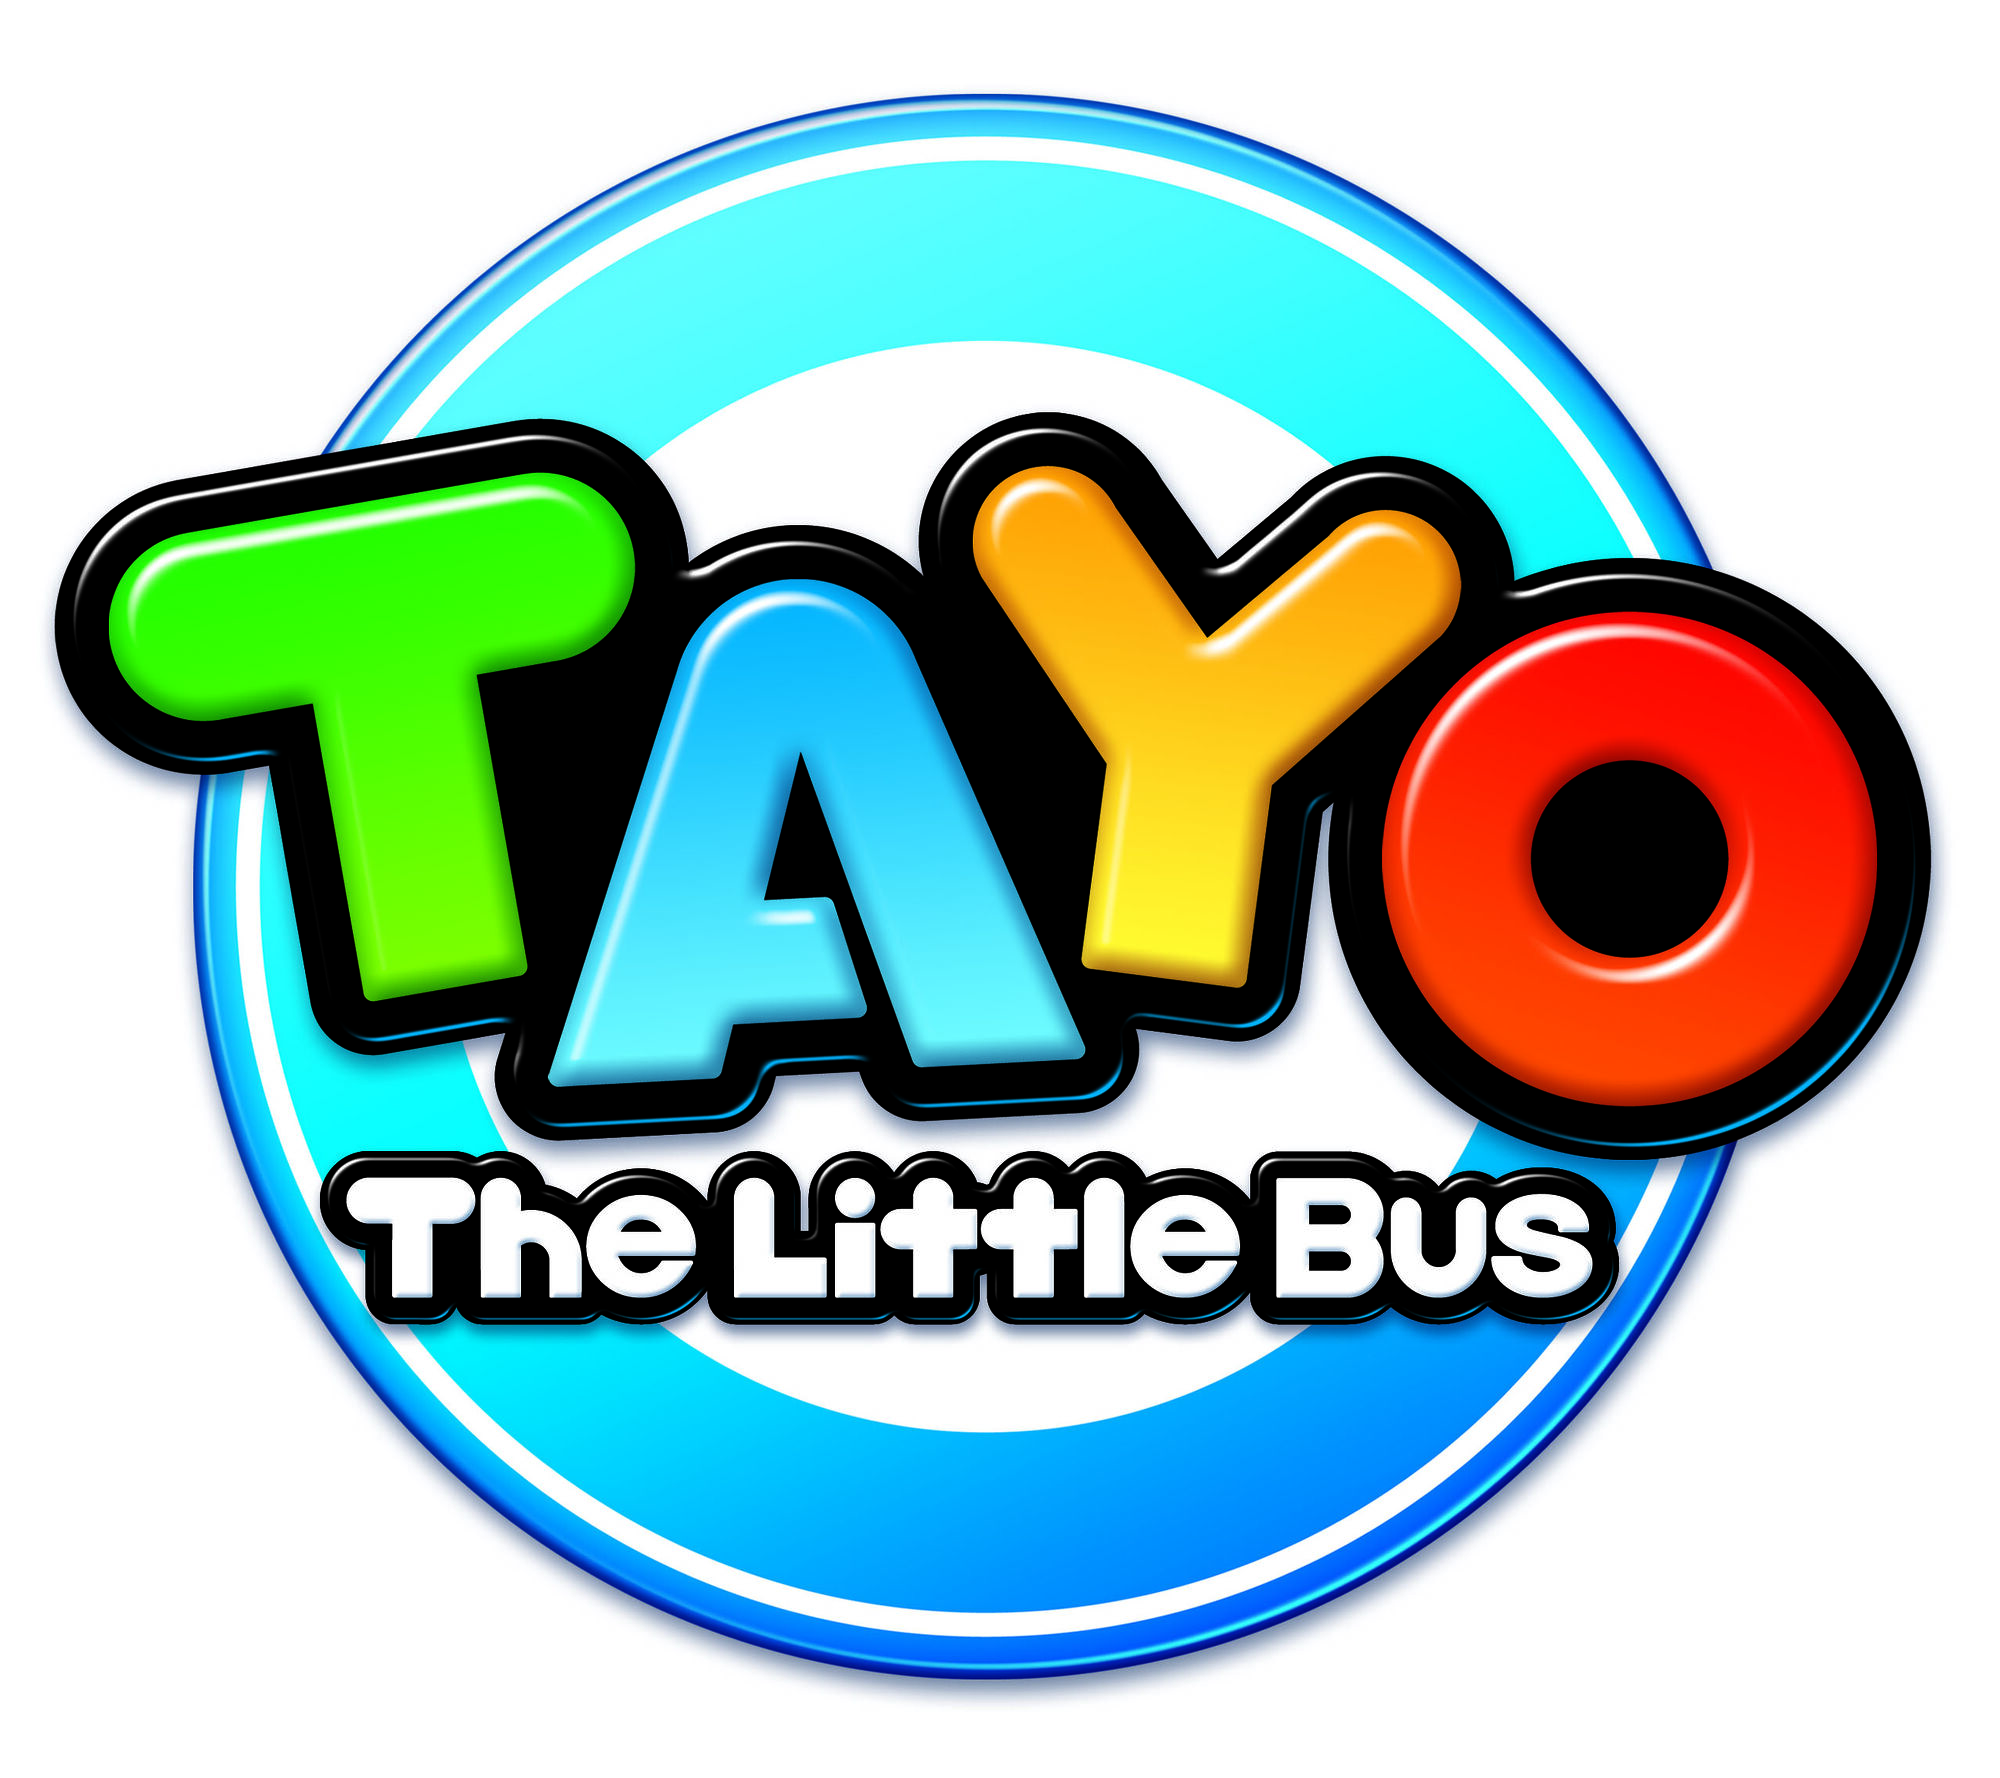 Image Tayo  the little  bus  2010 logo  jpg Logopedia 